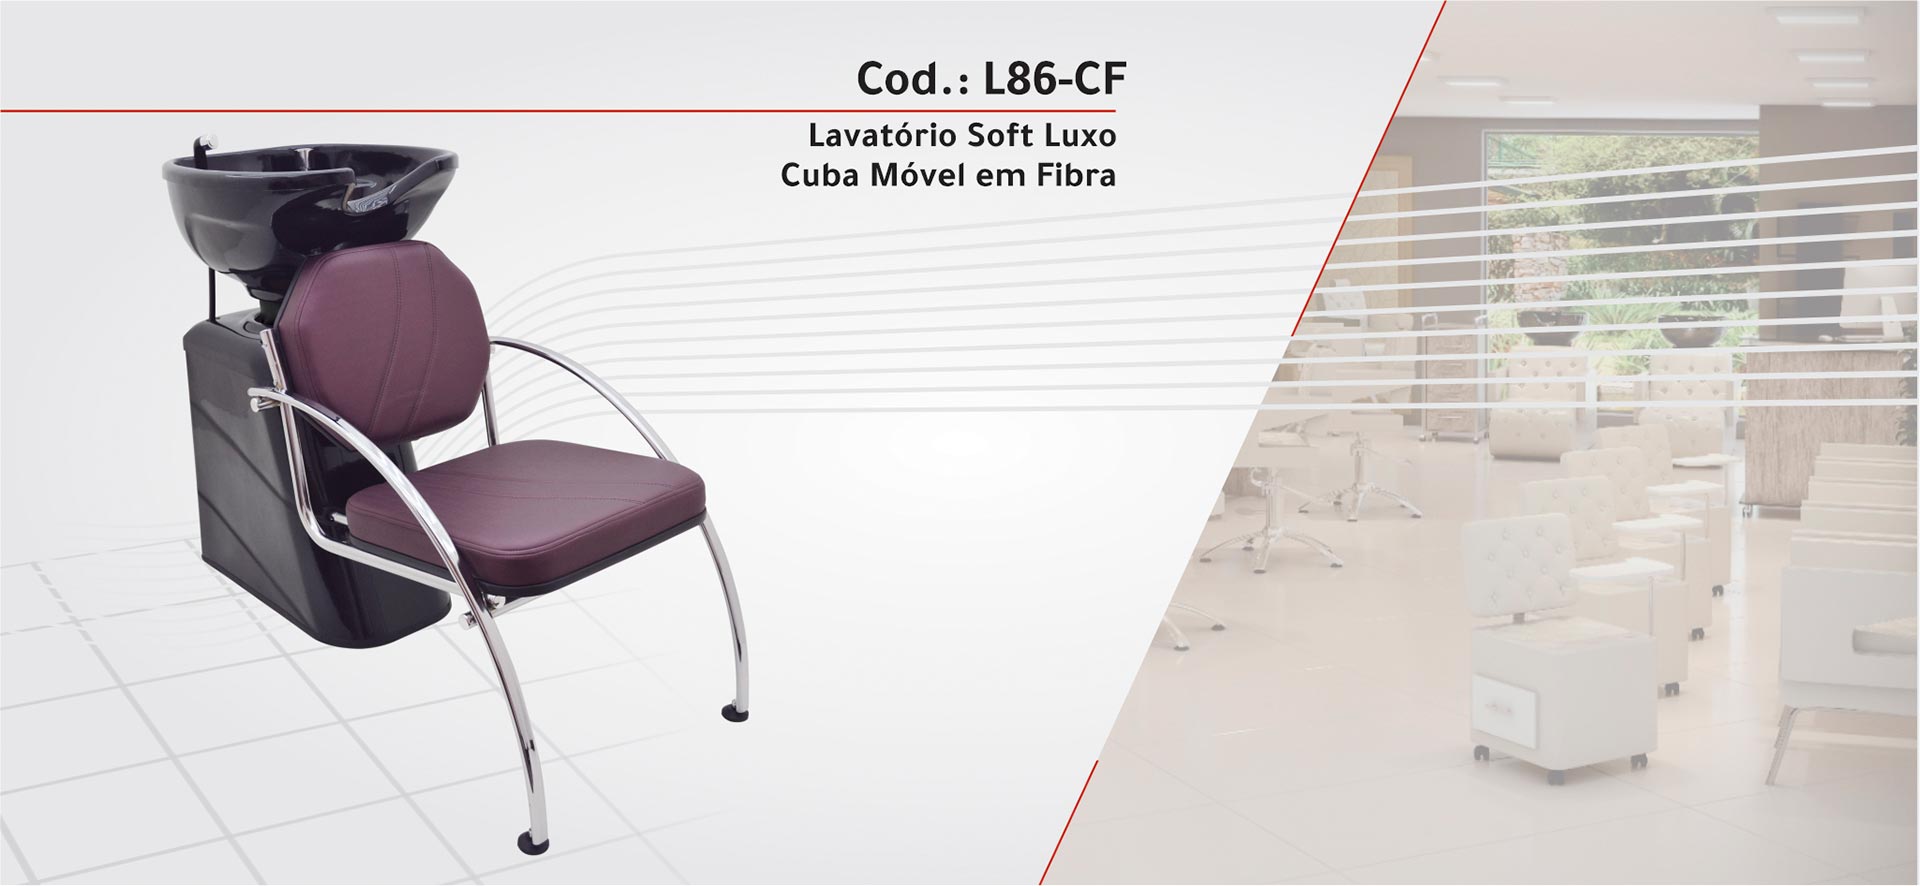 L86- CF - Lavatório Soft Luxo - Cuba Fibra Móvel